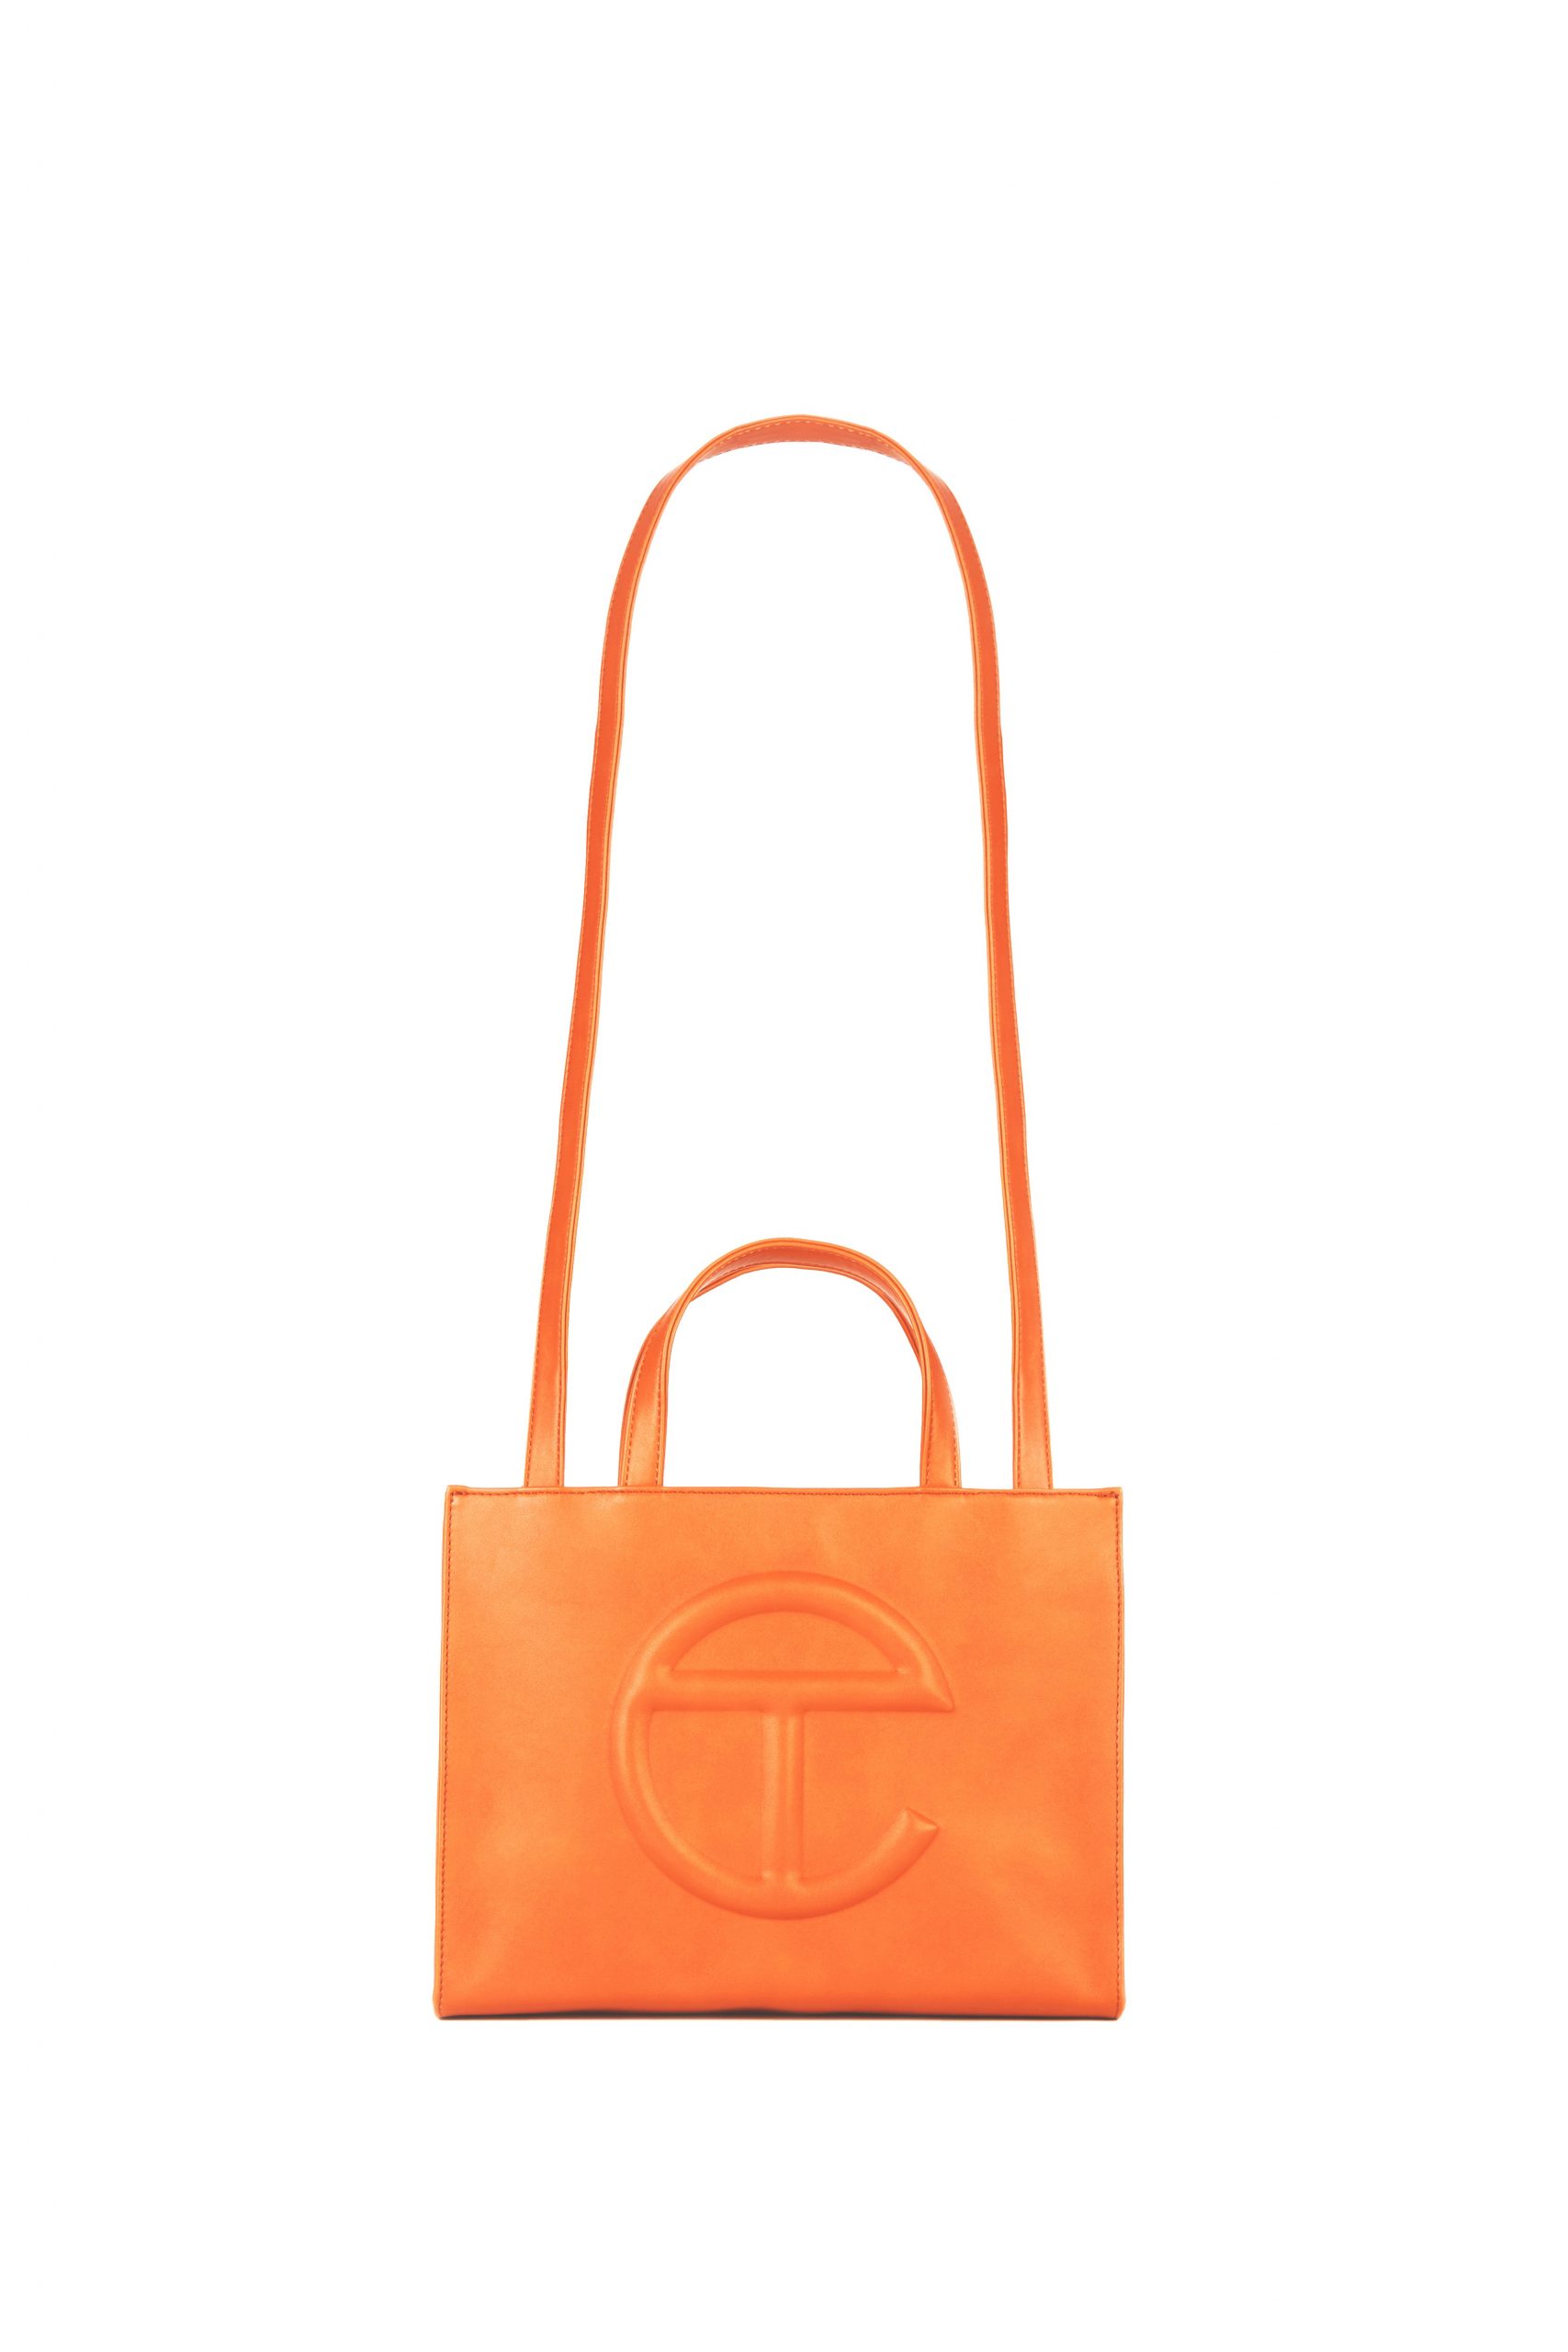 Medium Orange Shopping Bag